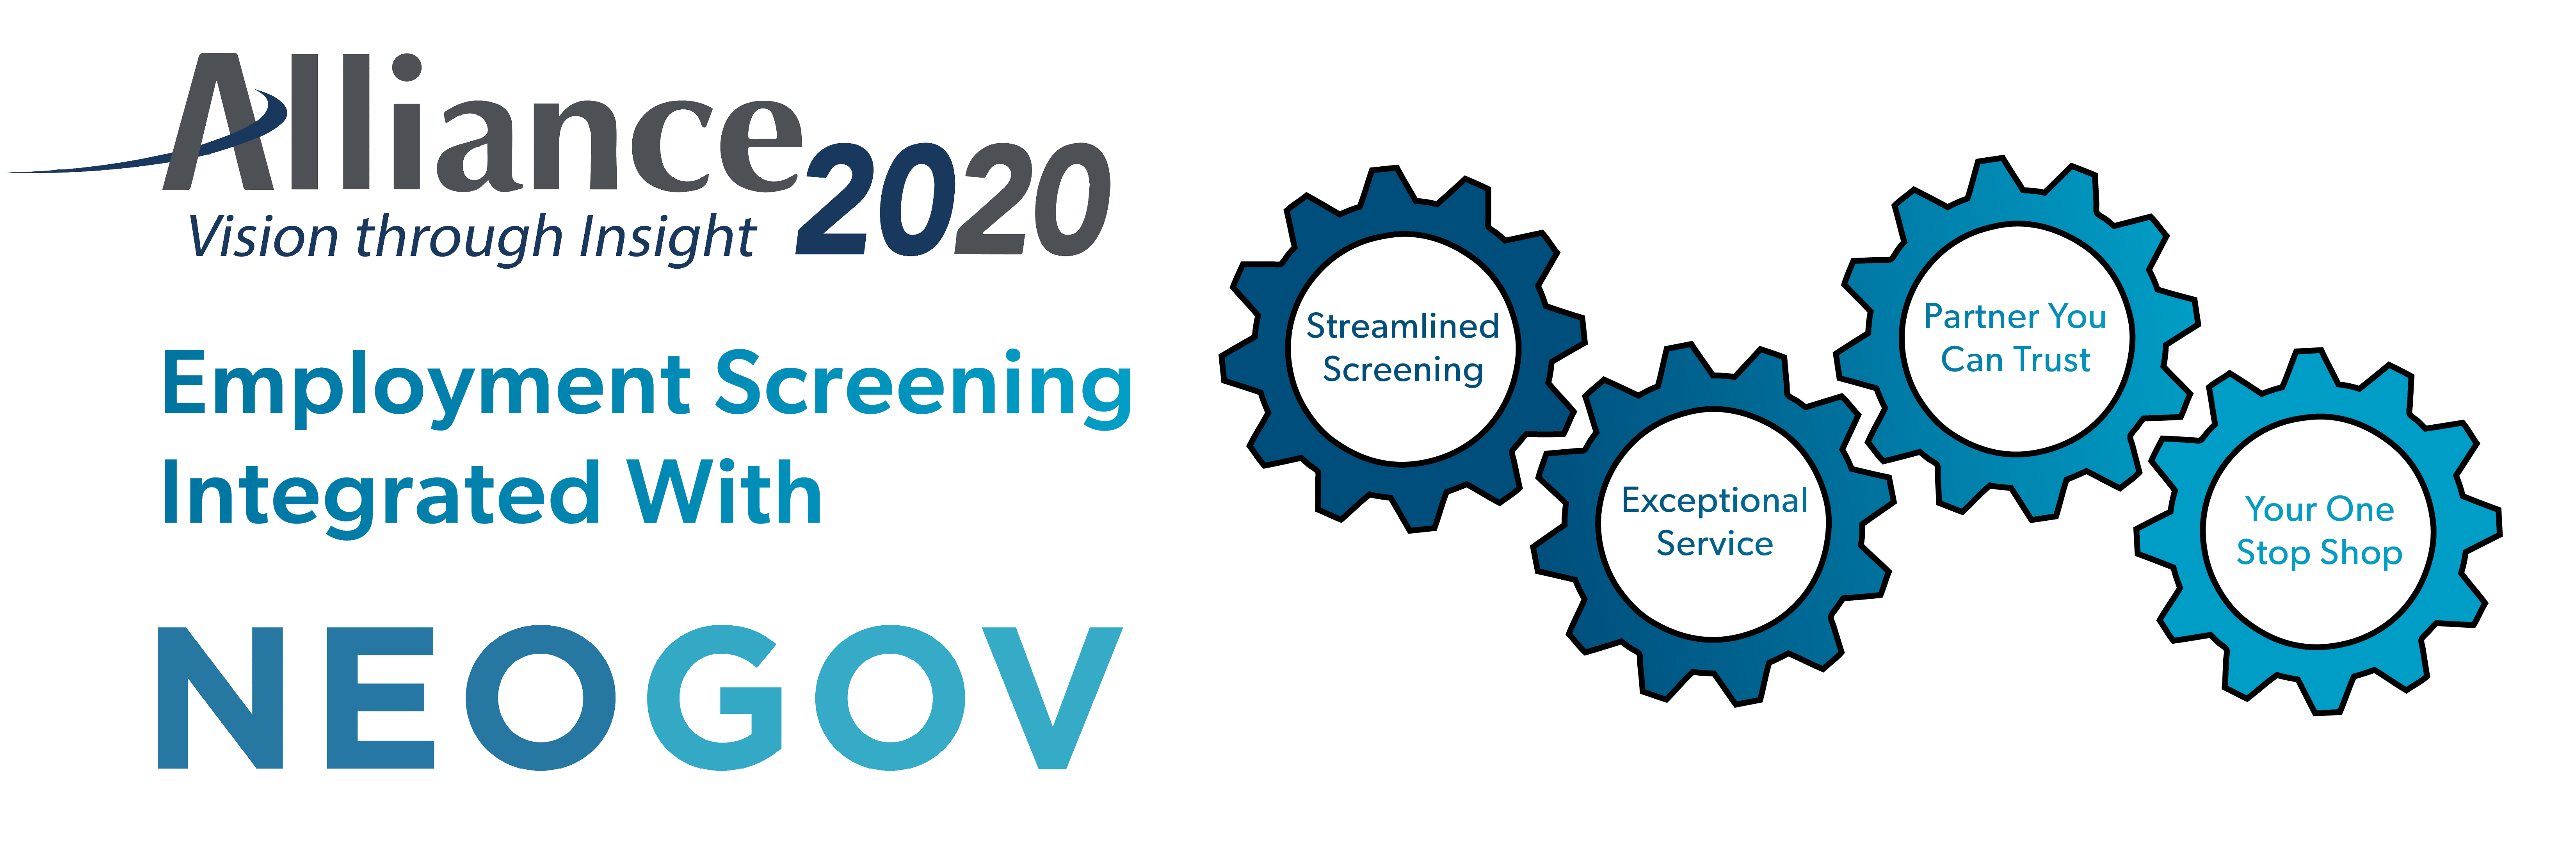 Alliance 2020 has partnered with NEOGOV